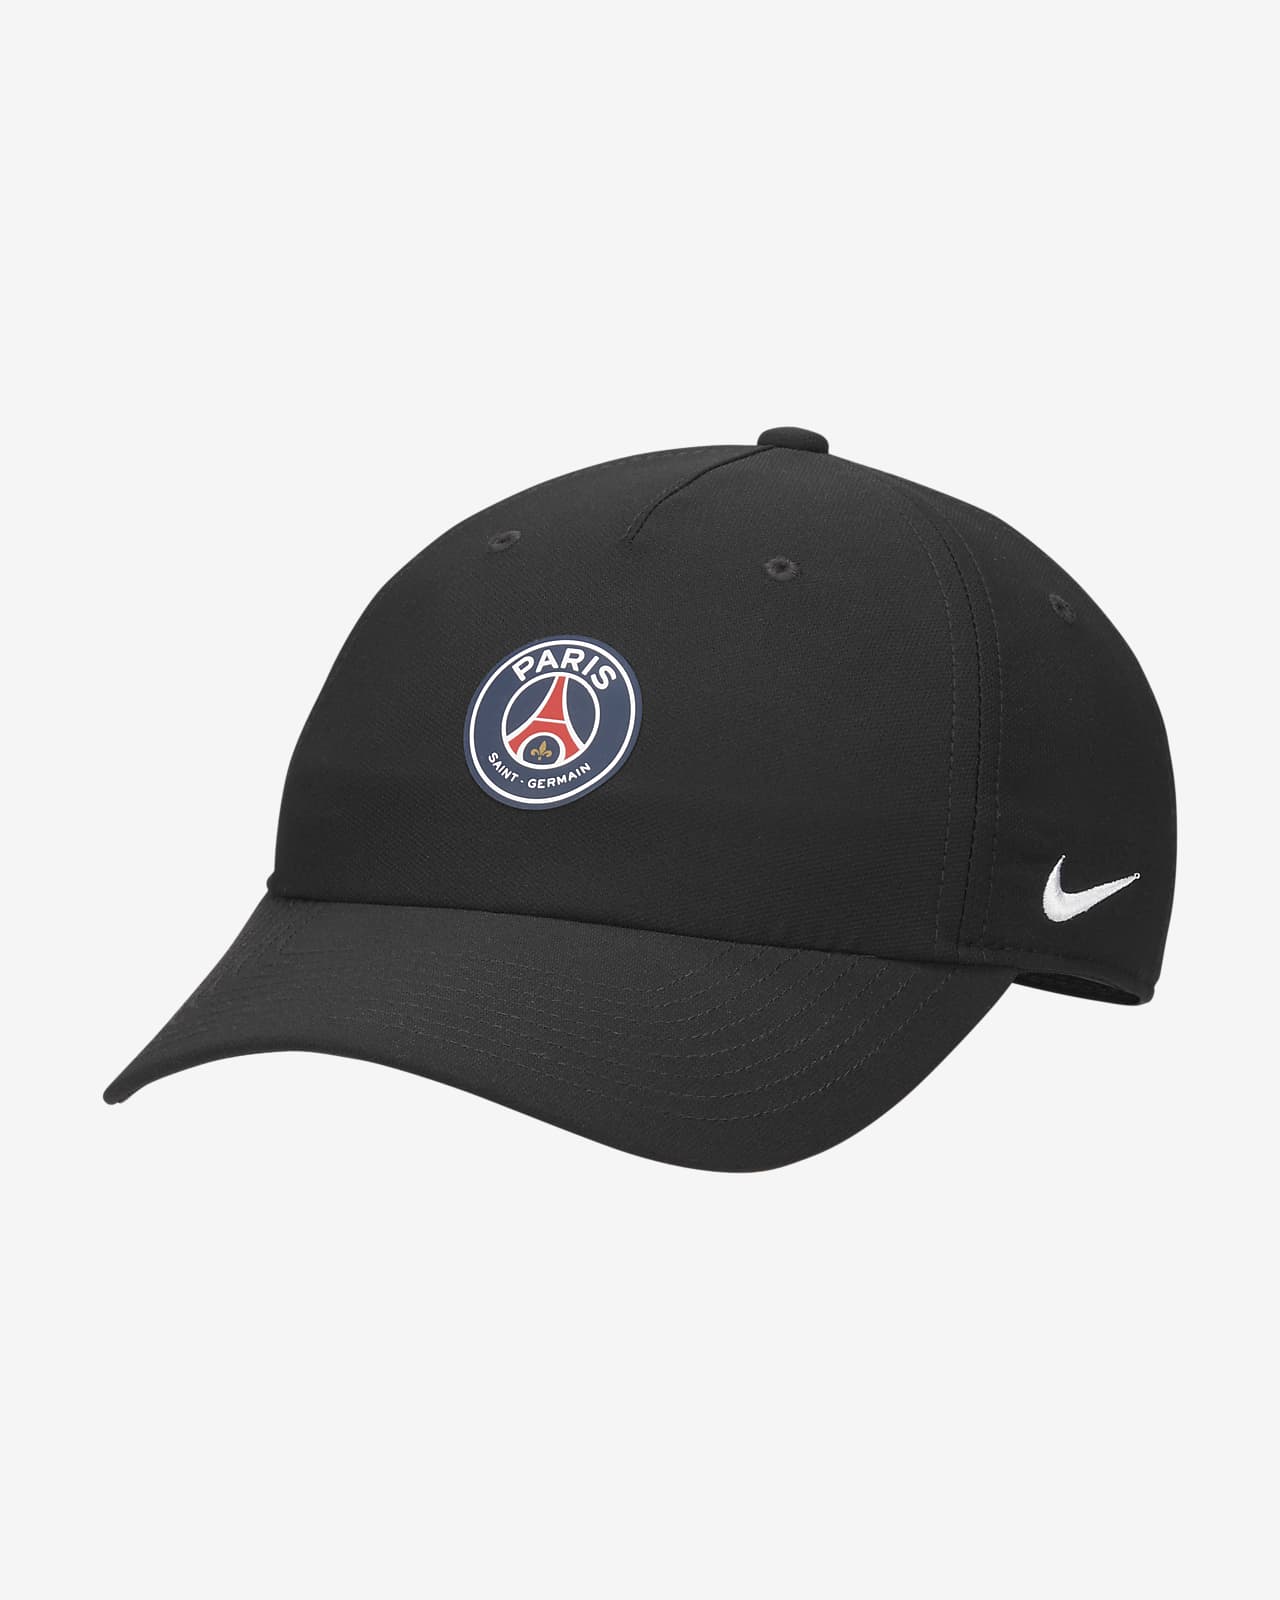 Paris Saint-Germain Club Nike unstrukturierte Fußball-Cap